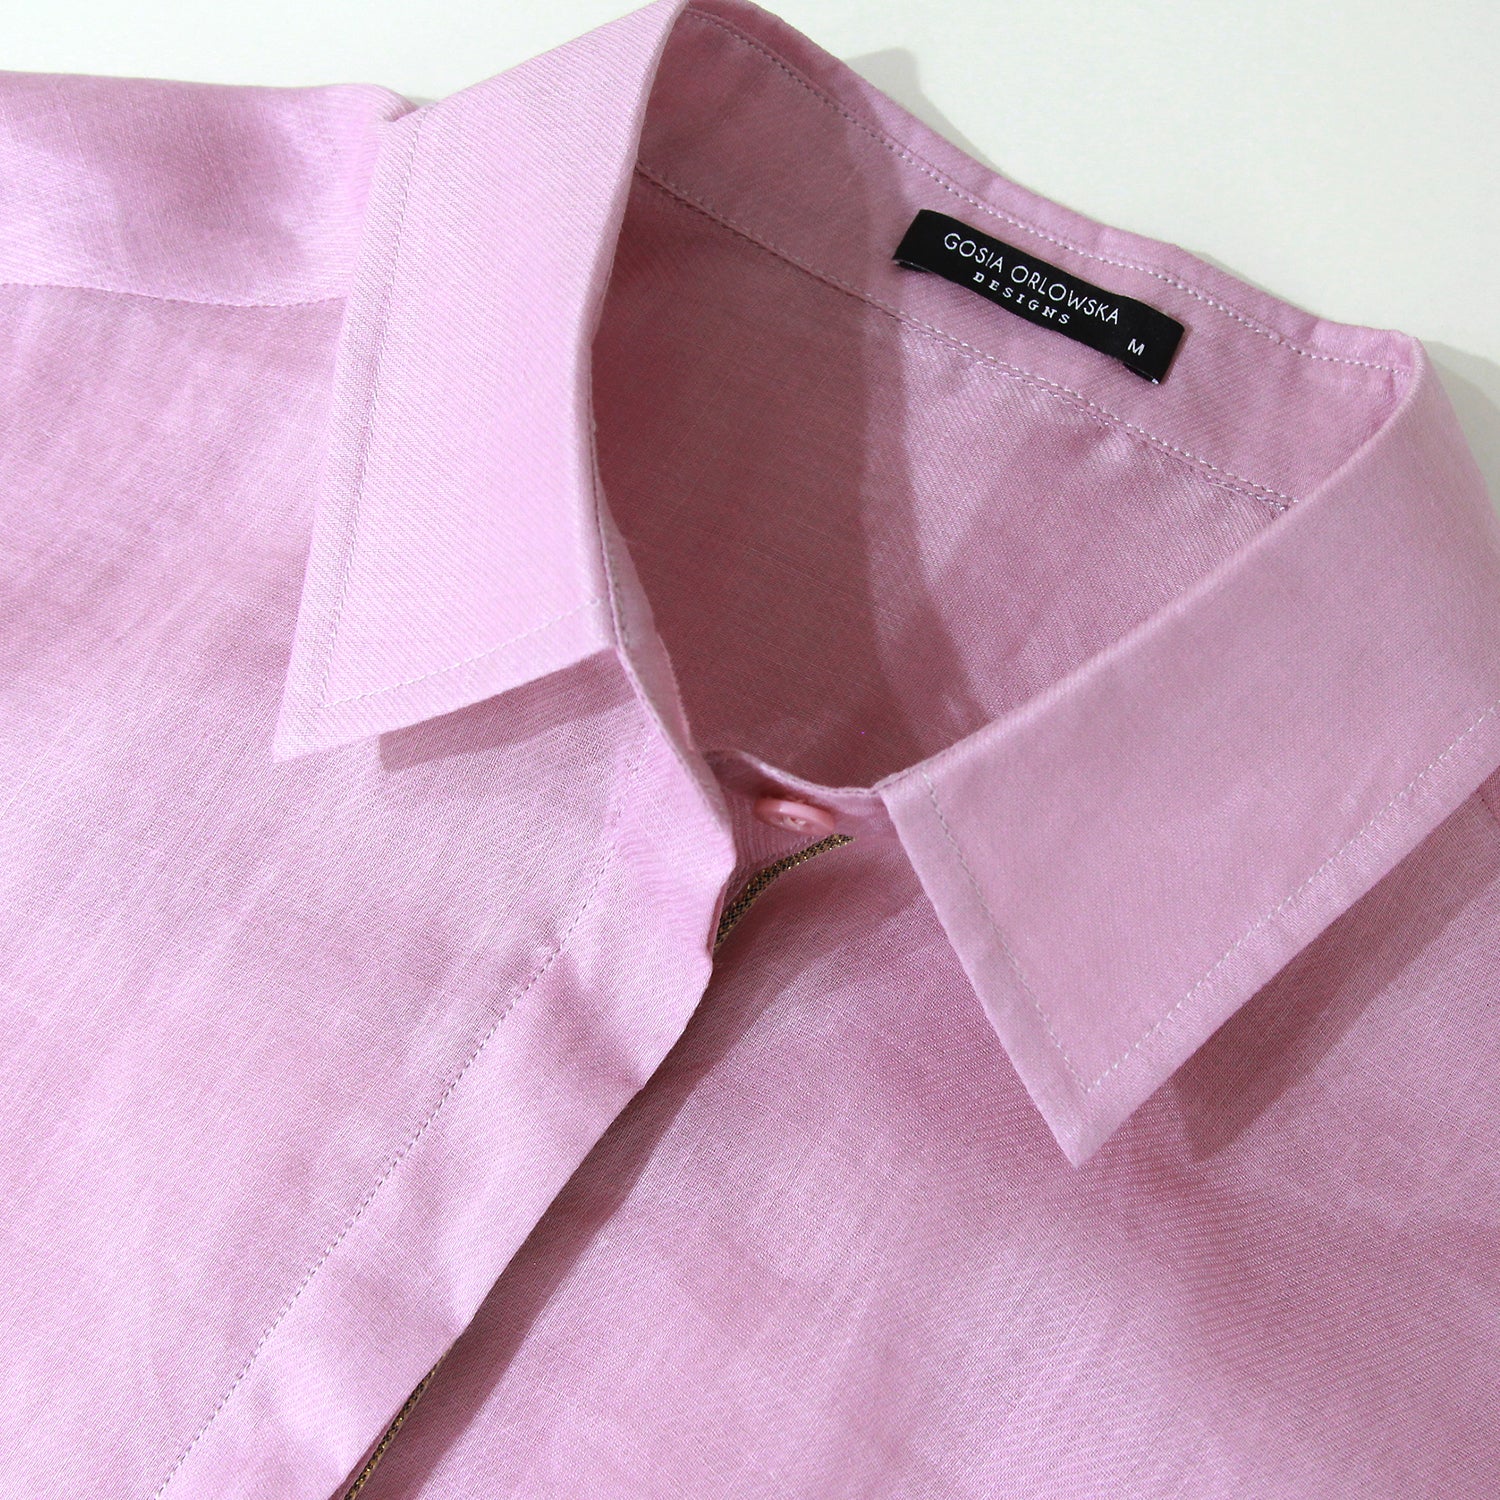 Stylish JODIE Oversized Shirt in Pink